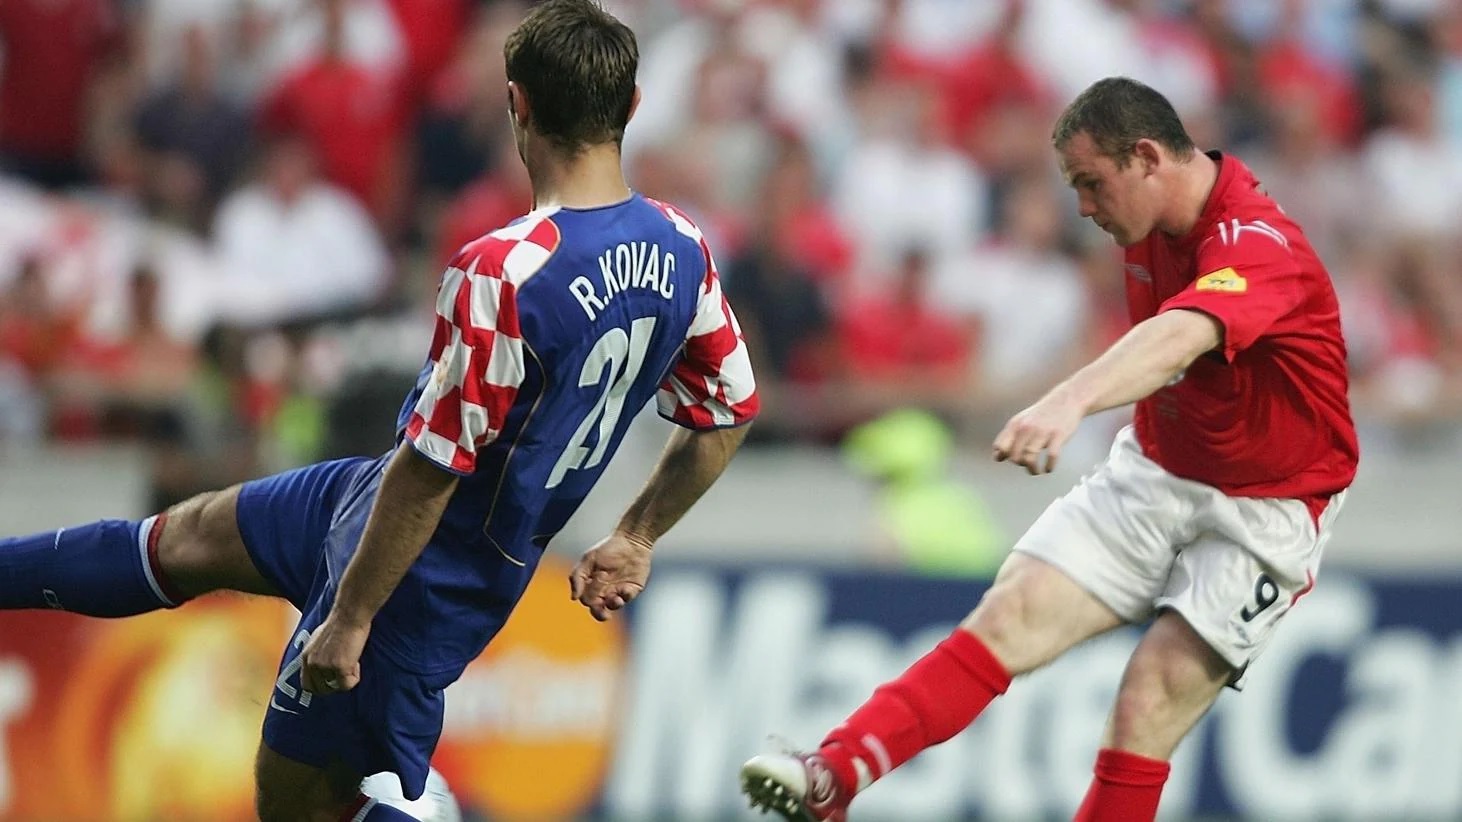 Anh vs Croatia